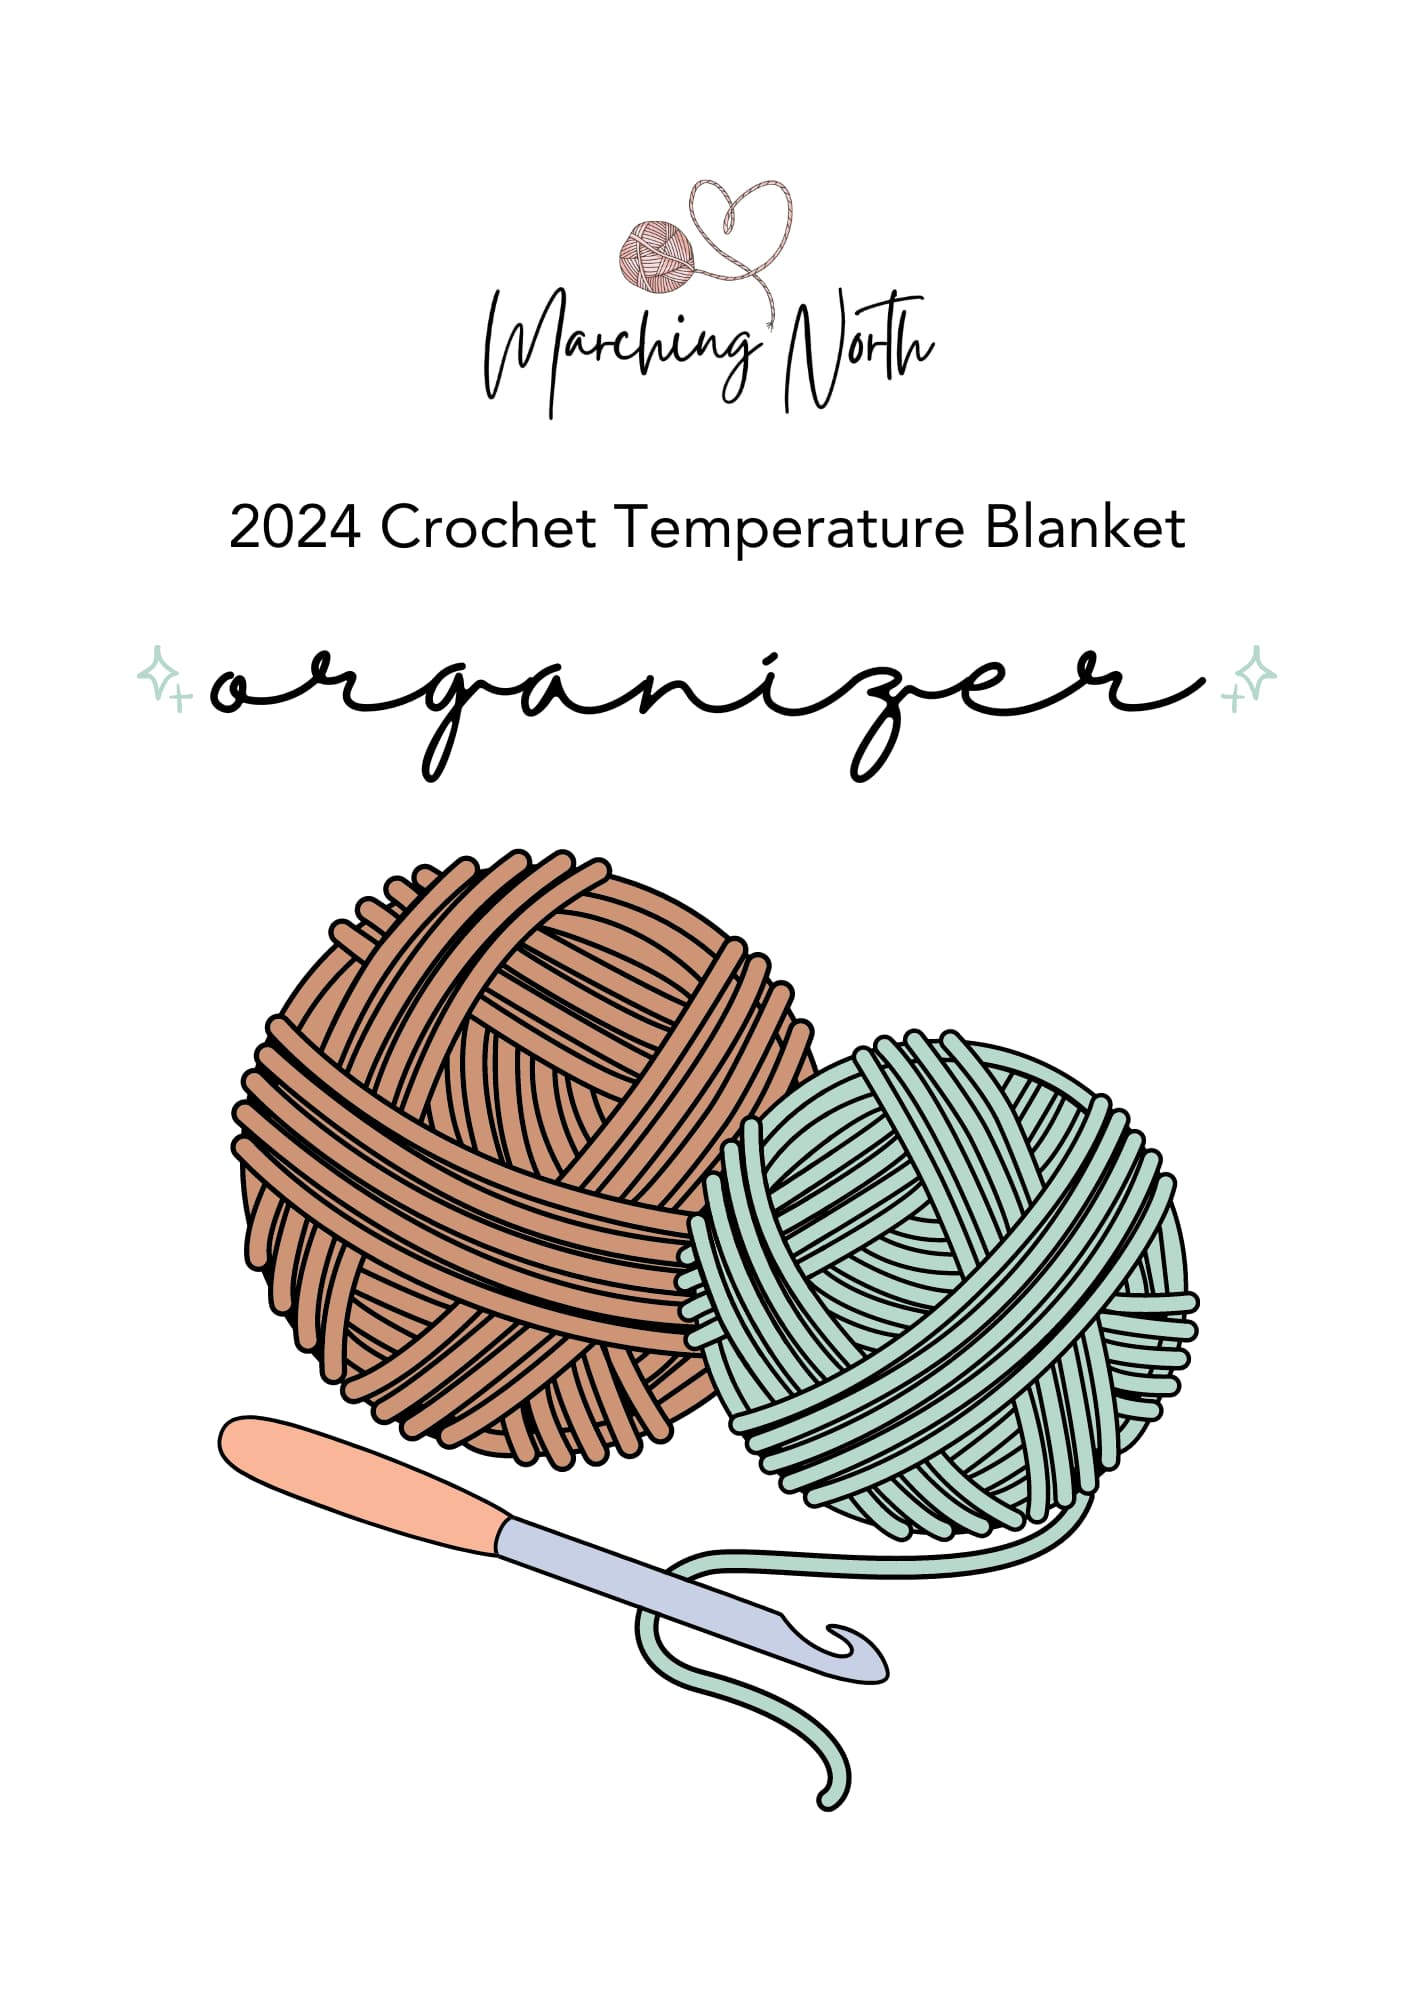 Crochet temperature blanket log